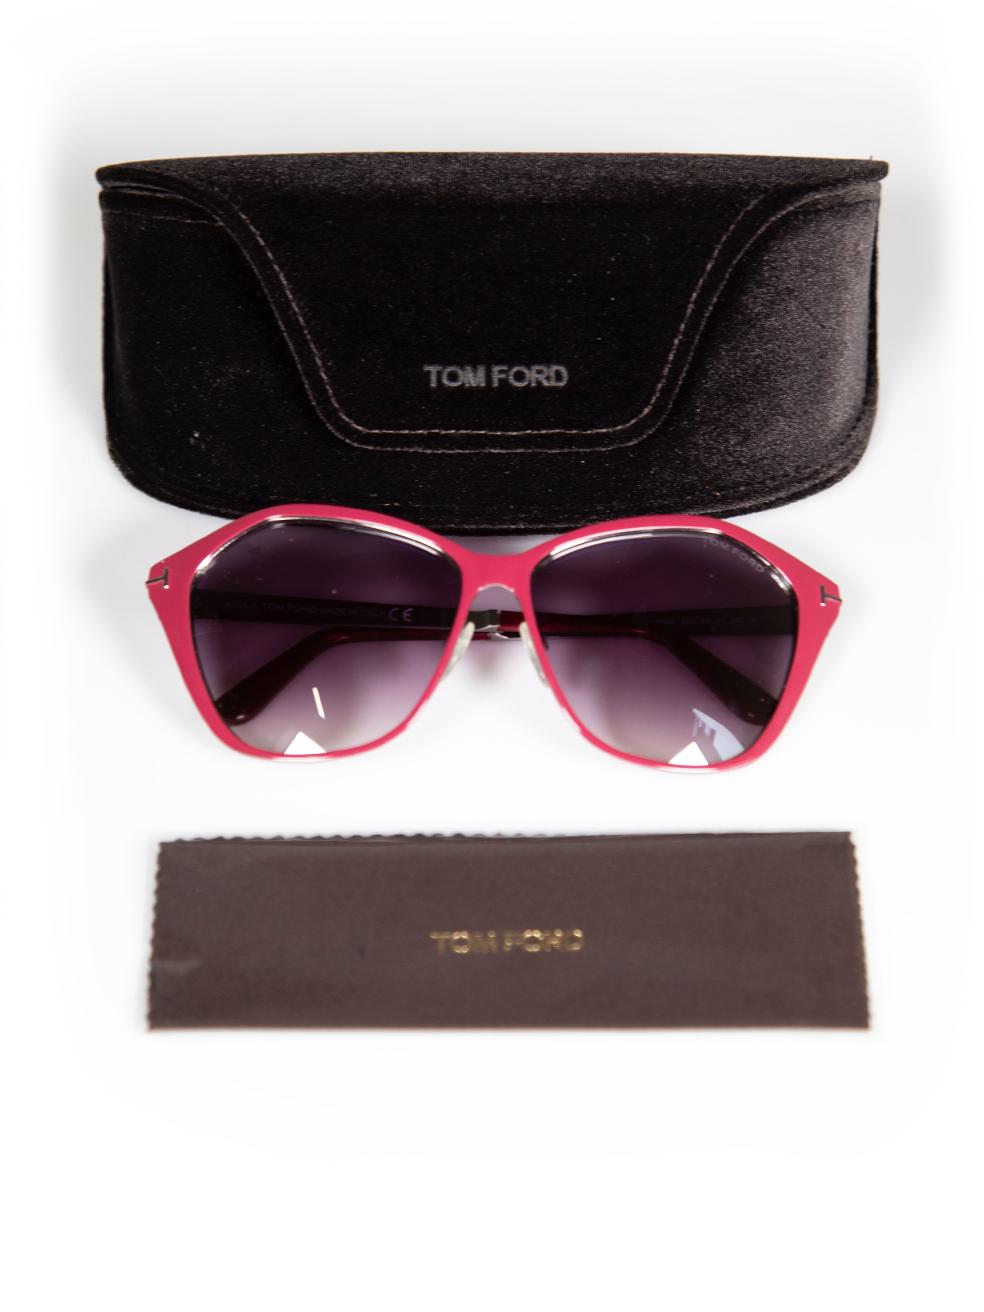 Tom Ford Lena 58 mm Shiny Bordeaux Sunglasses For Sale 4